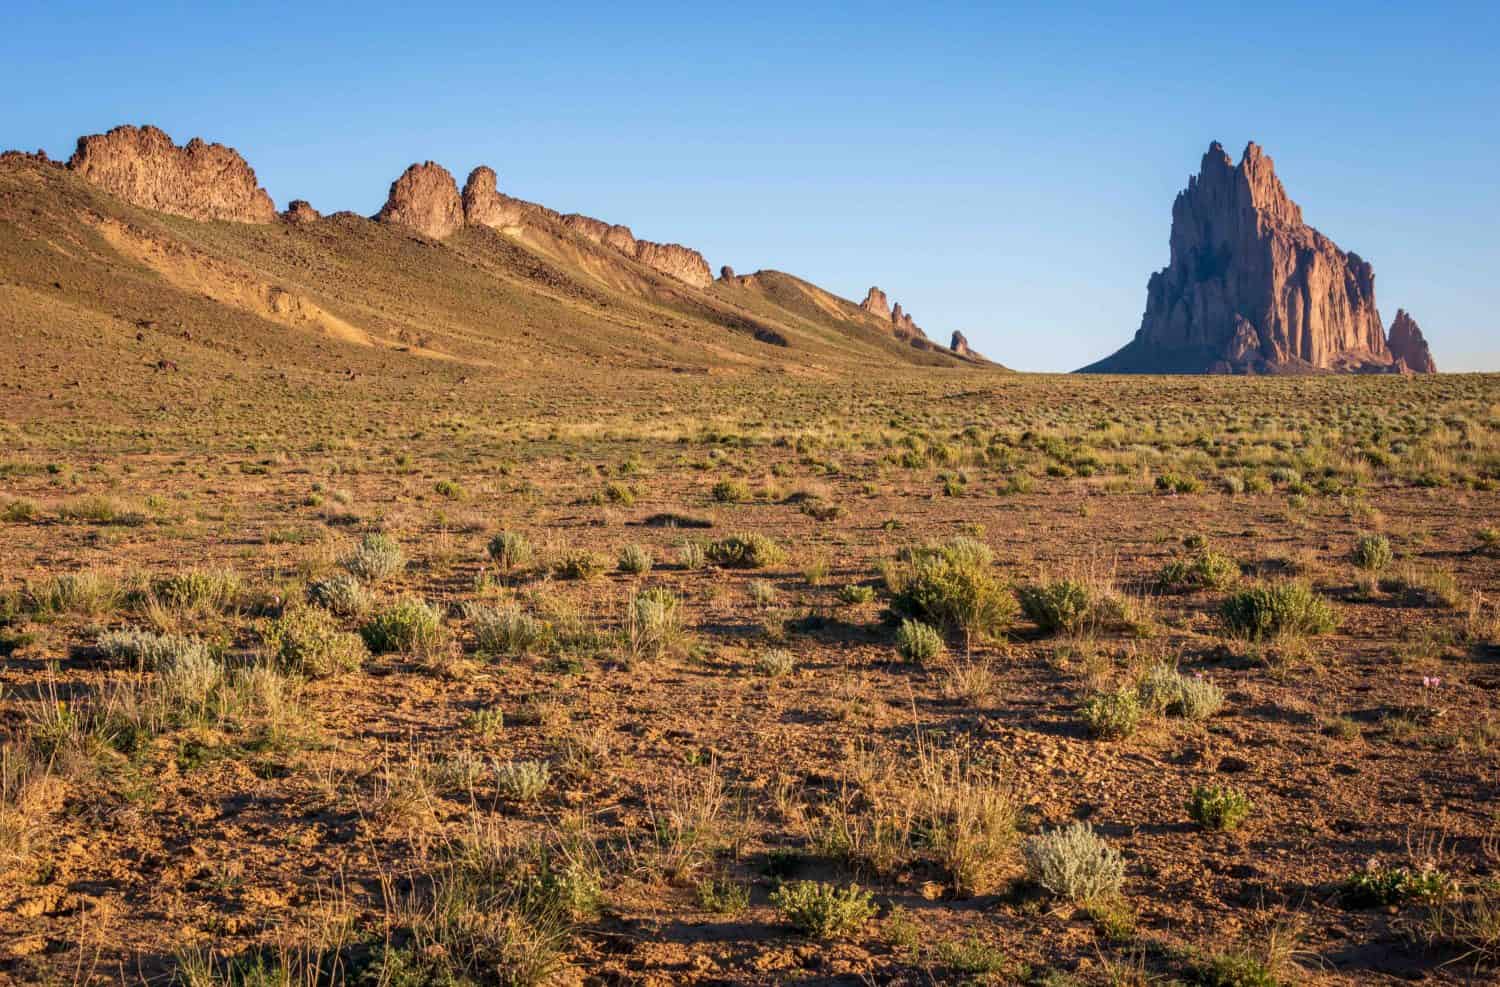 Shiprock iin the Navajo Nation, San Juan County, New Mexico